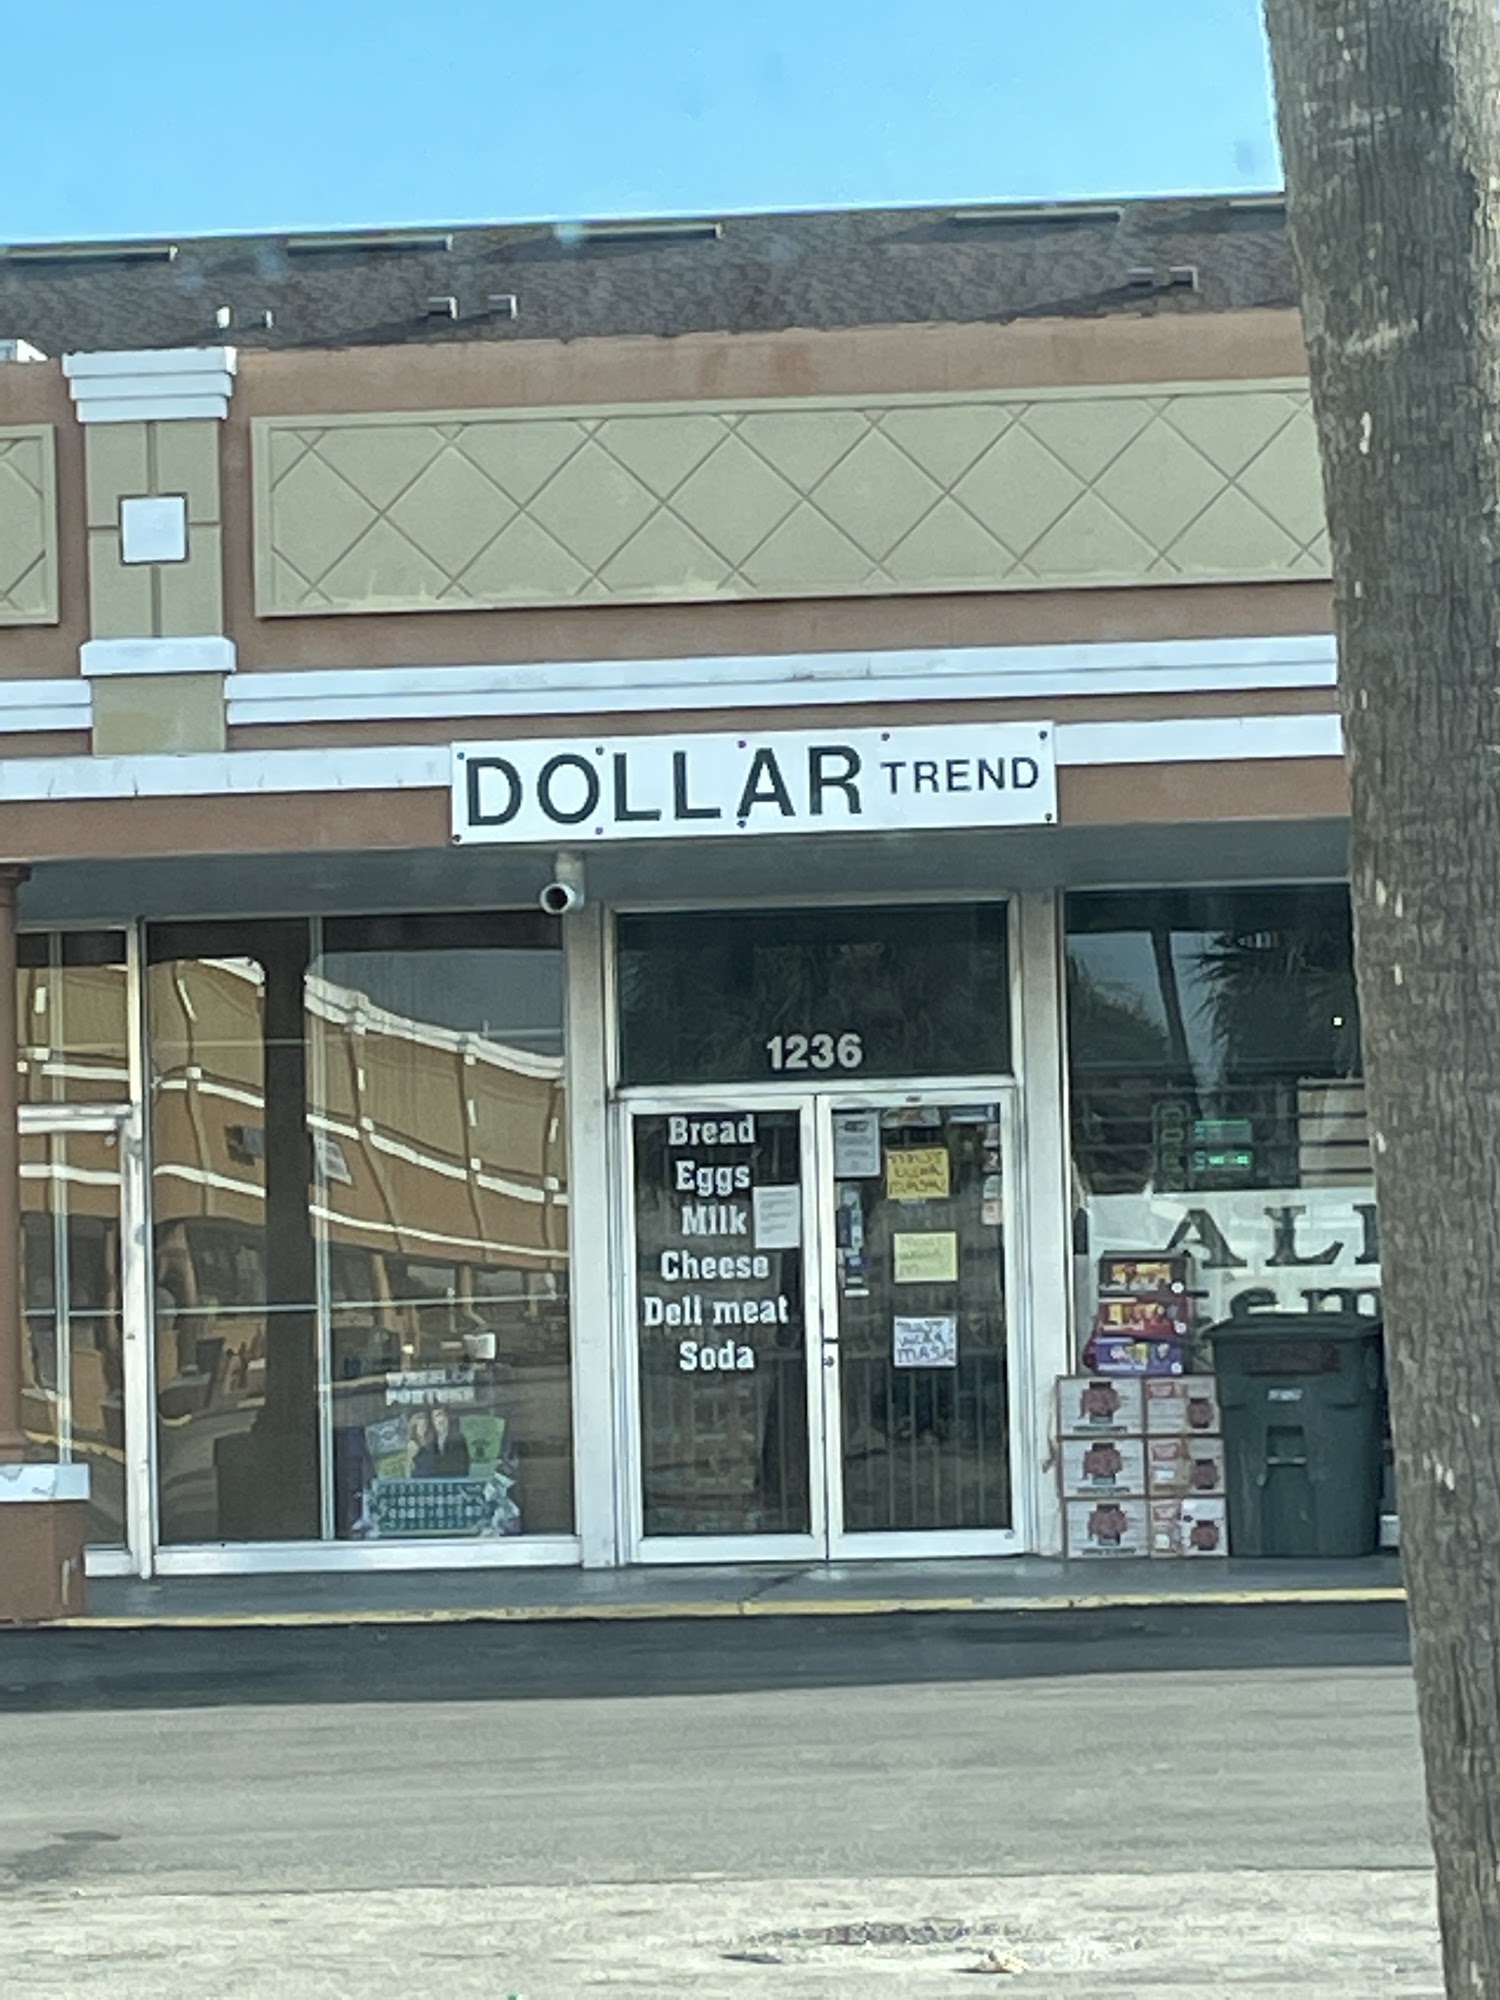 DOLLAR TREND